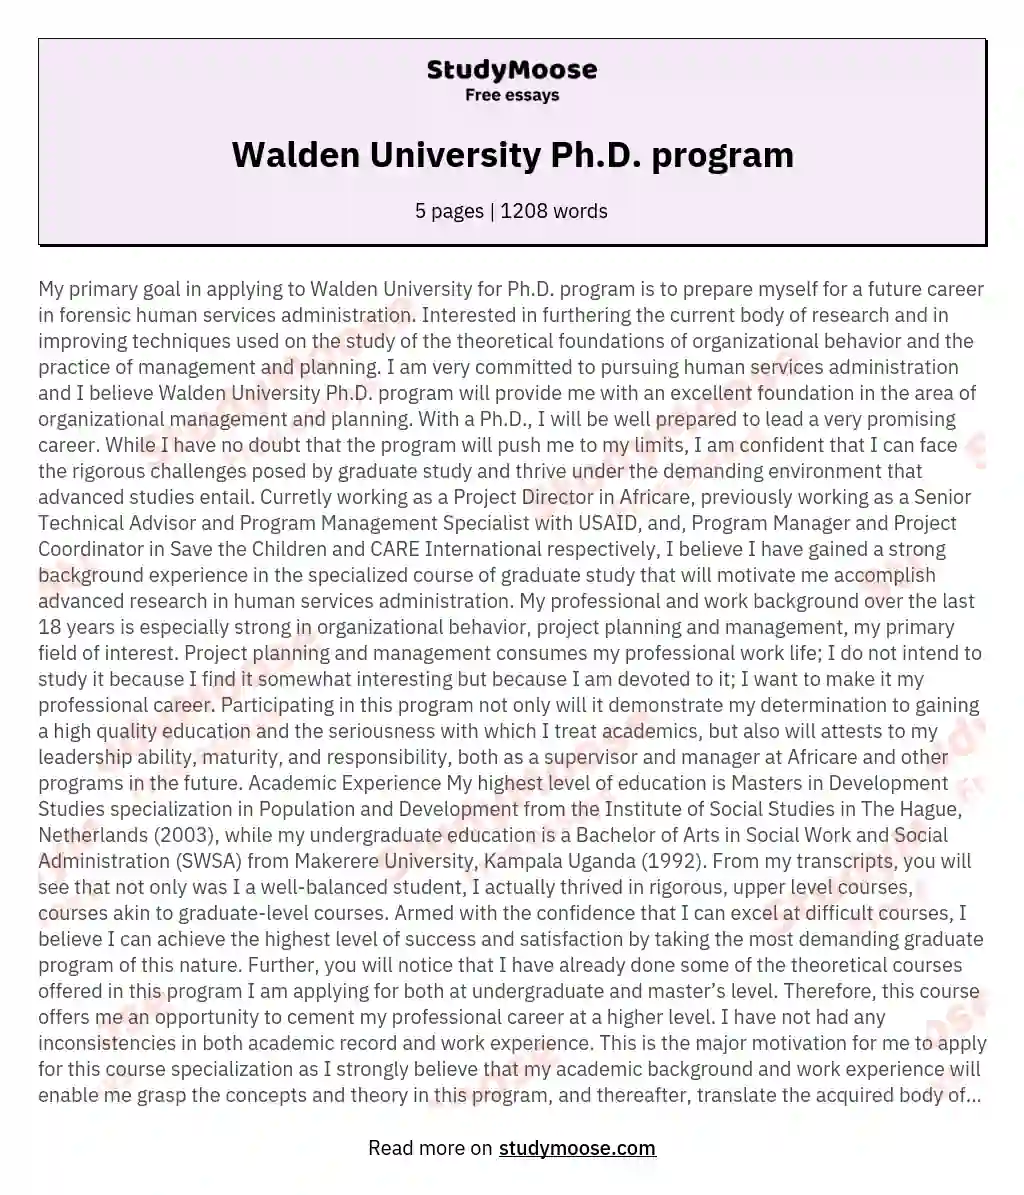 Walden University Ph.D. program essay